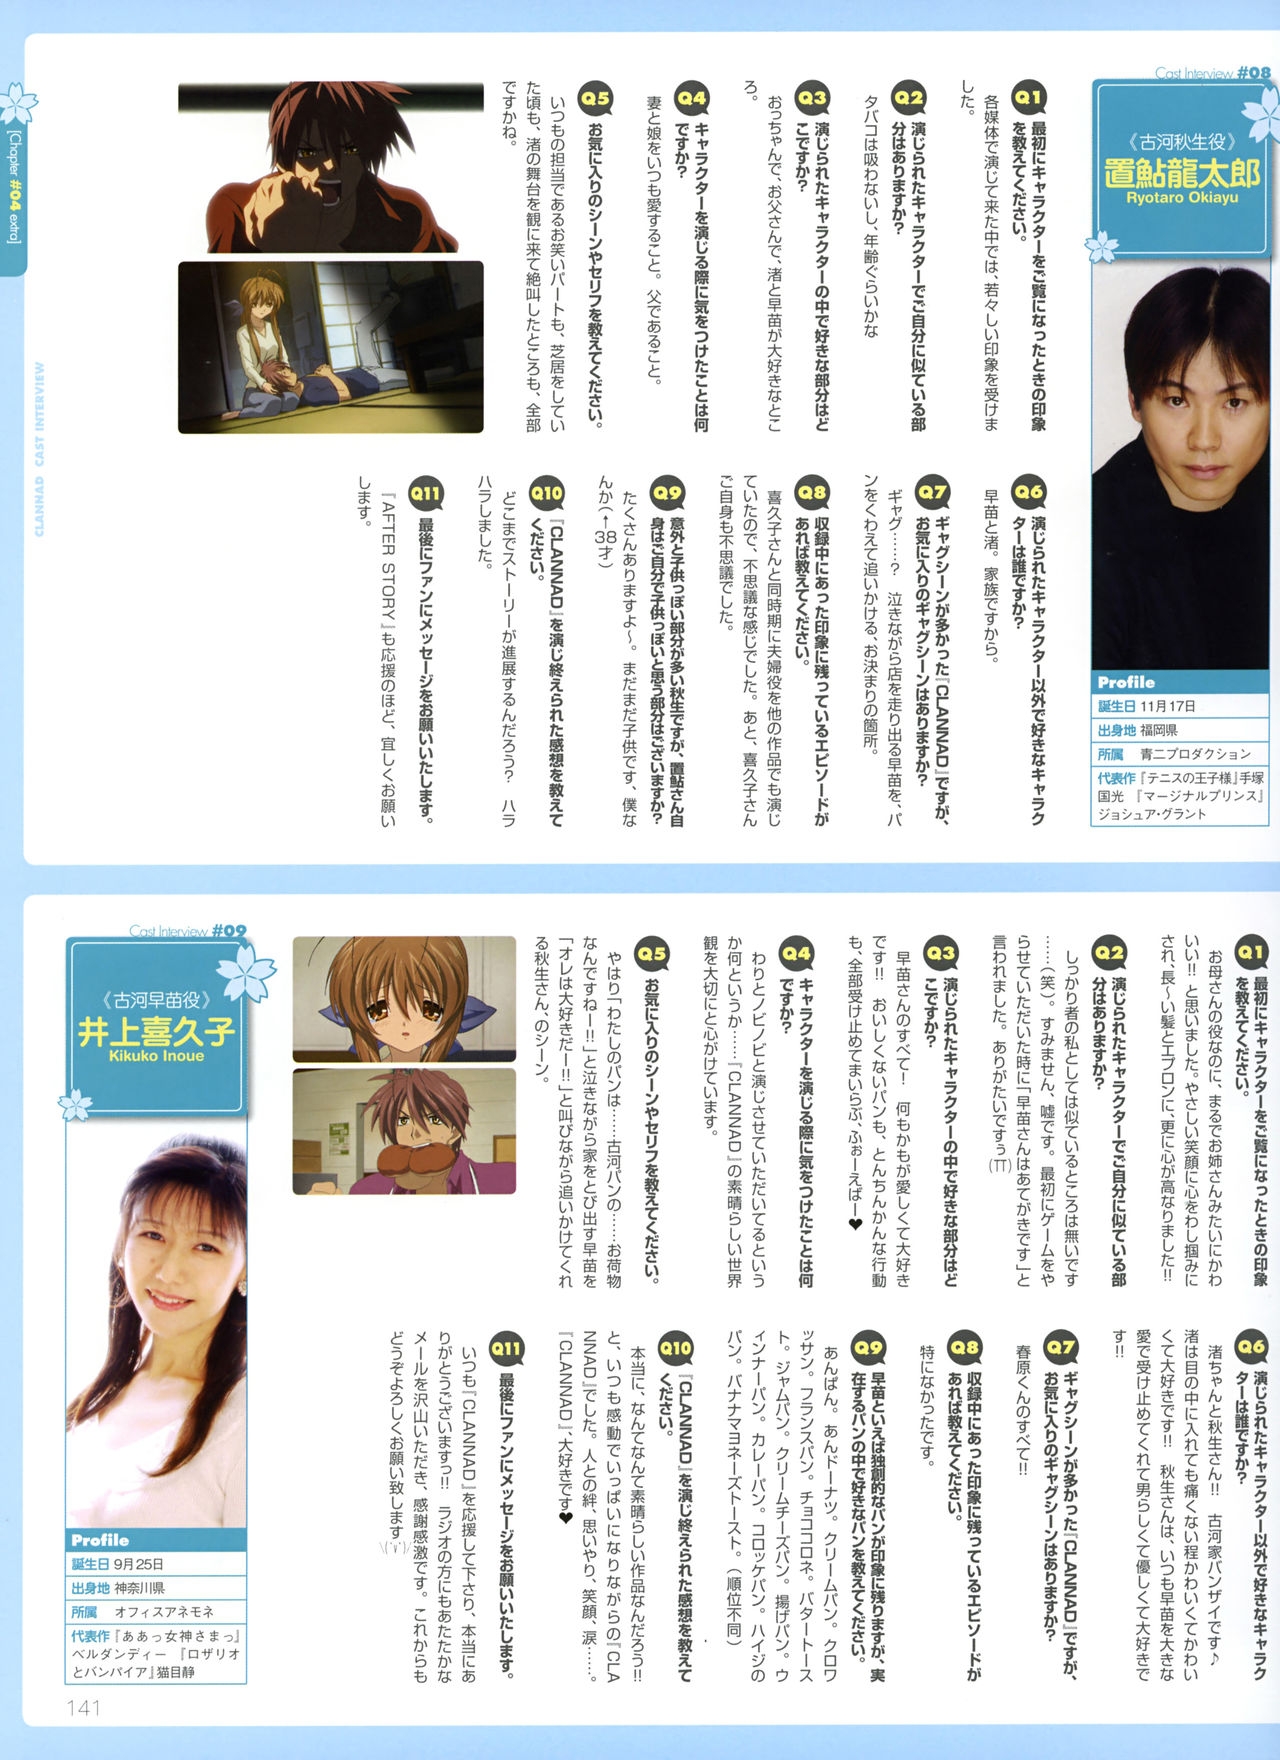 Clannad TV Animation Visual Fan Book 144